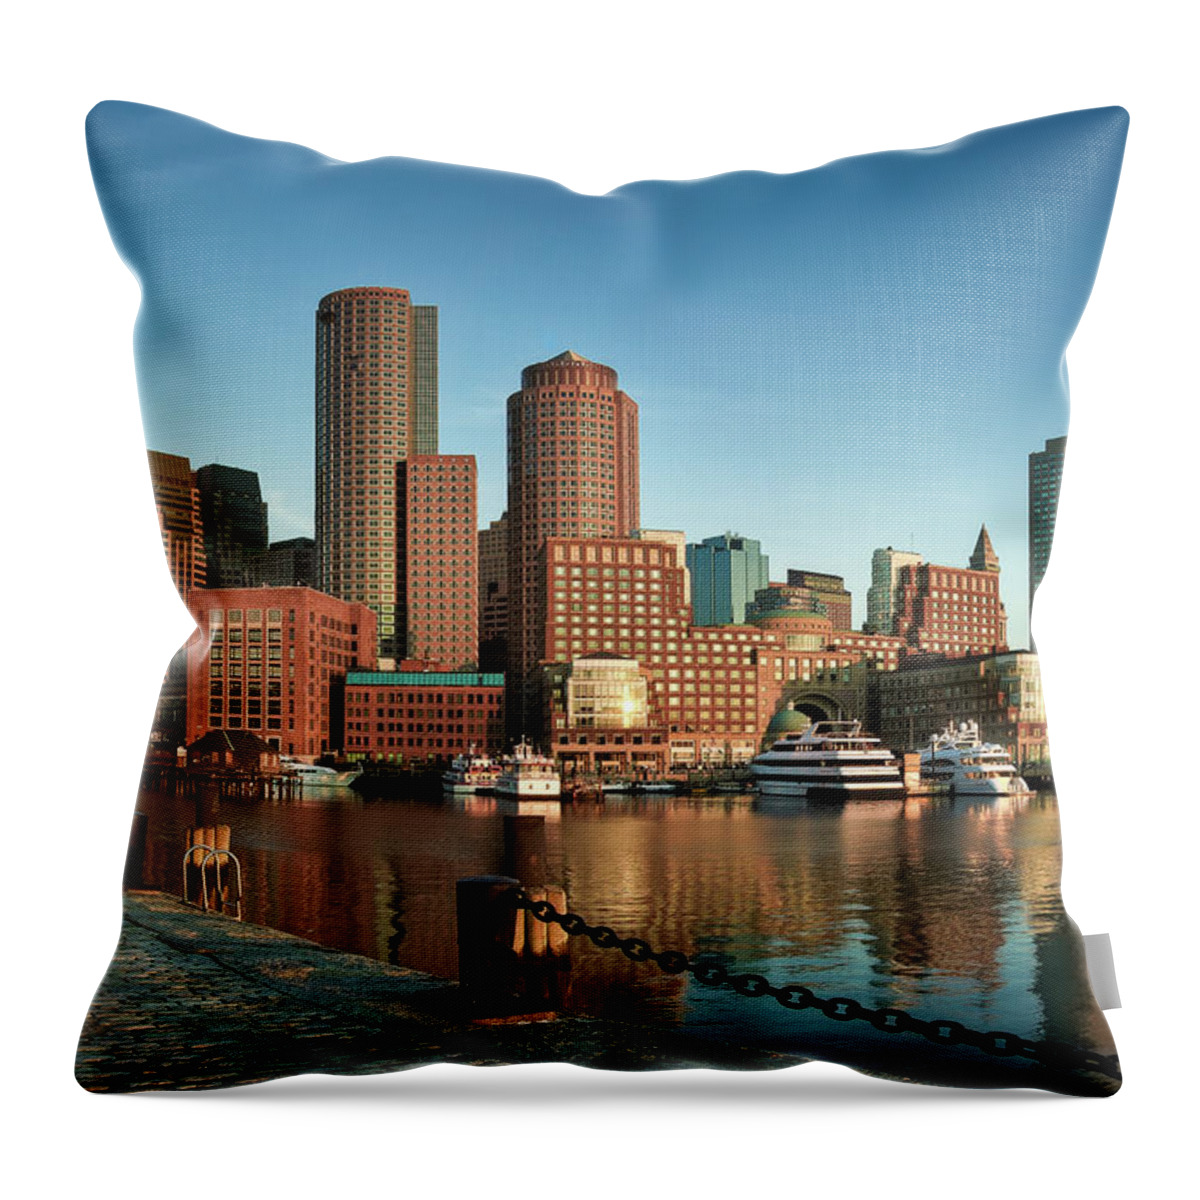 Outdoors Throw Pillow featuring the photograph Boston Morning Skyline by Sebastian Schlueter (sibbiblue)